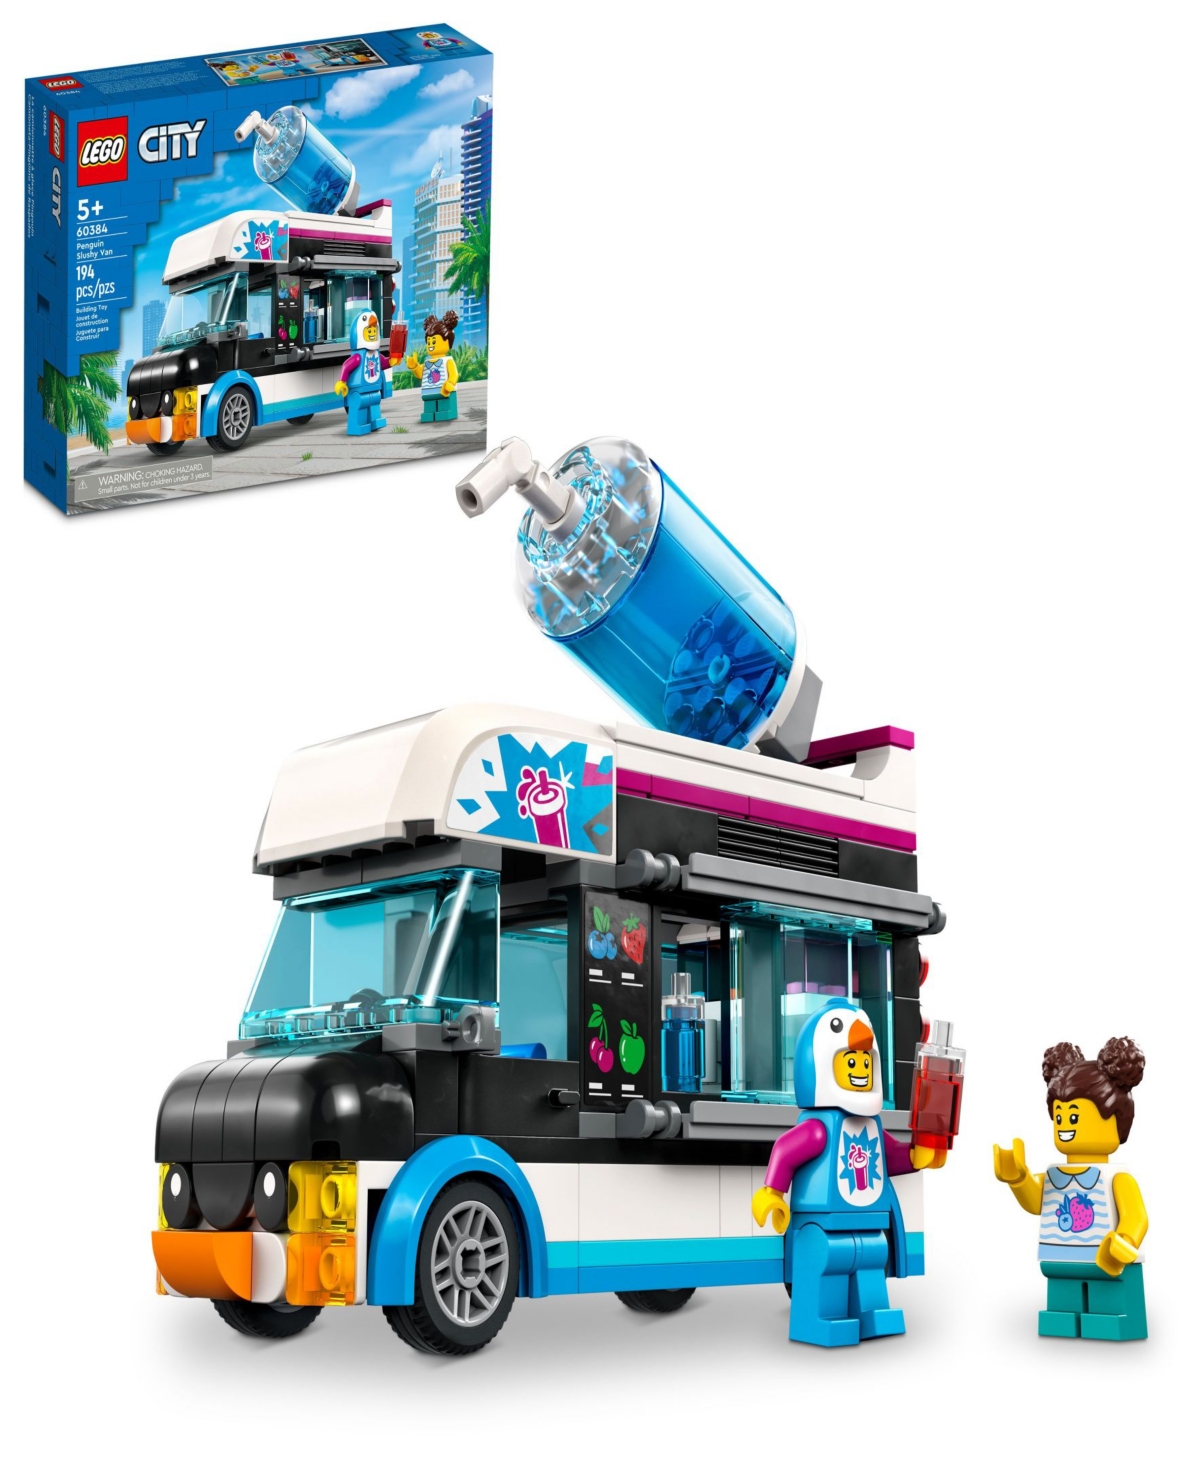 Lego City Great Vehicles Penguin Slushy Van With Minifigures 60384 Toy Building Set In Multicolor